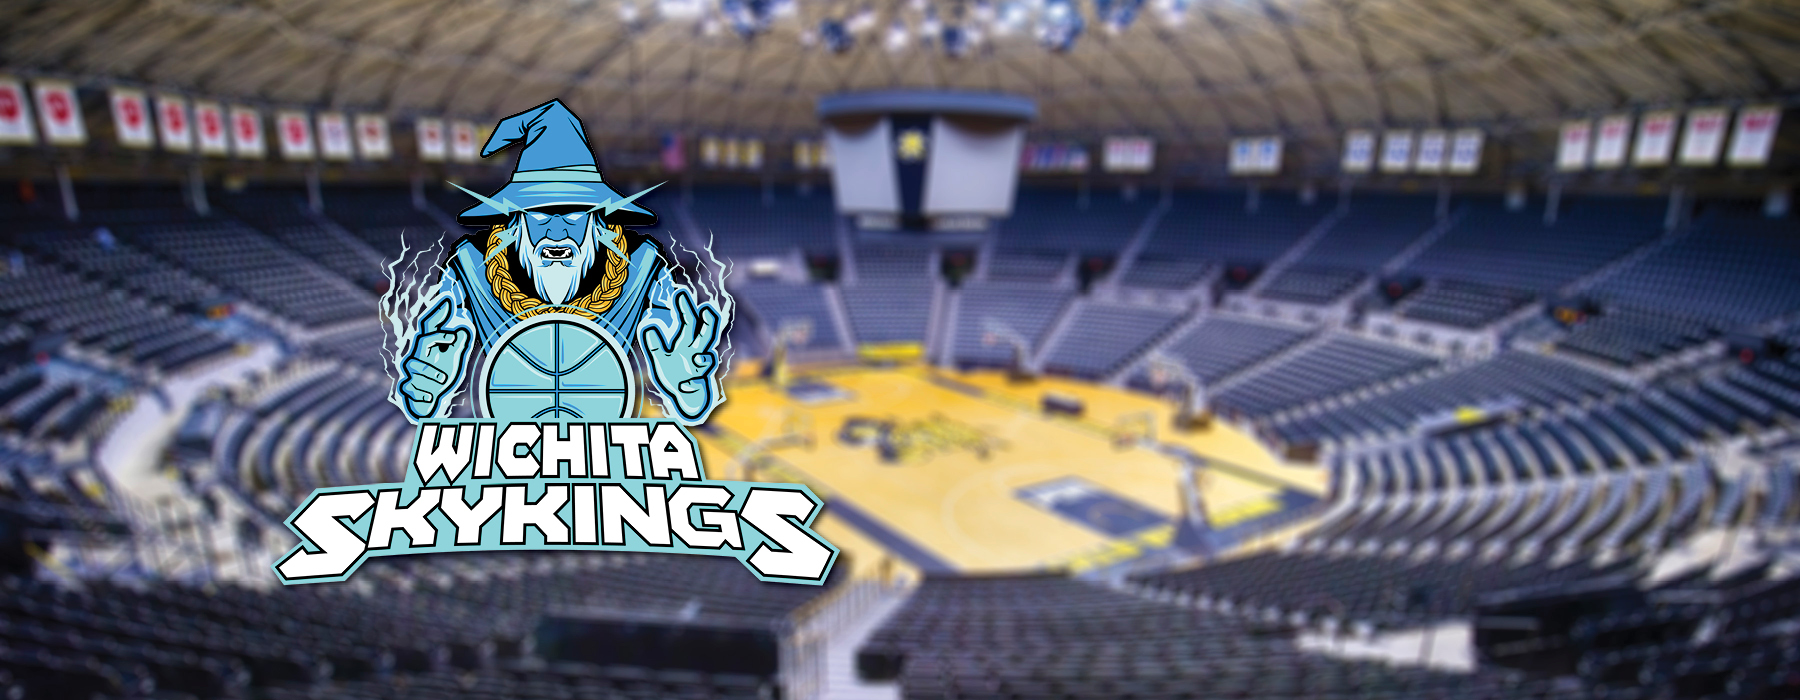 Team, Wichita Sky Kings